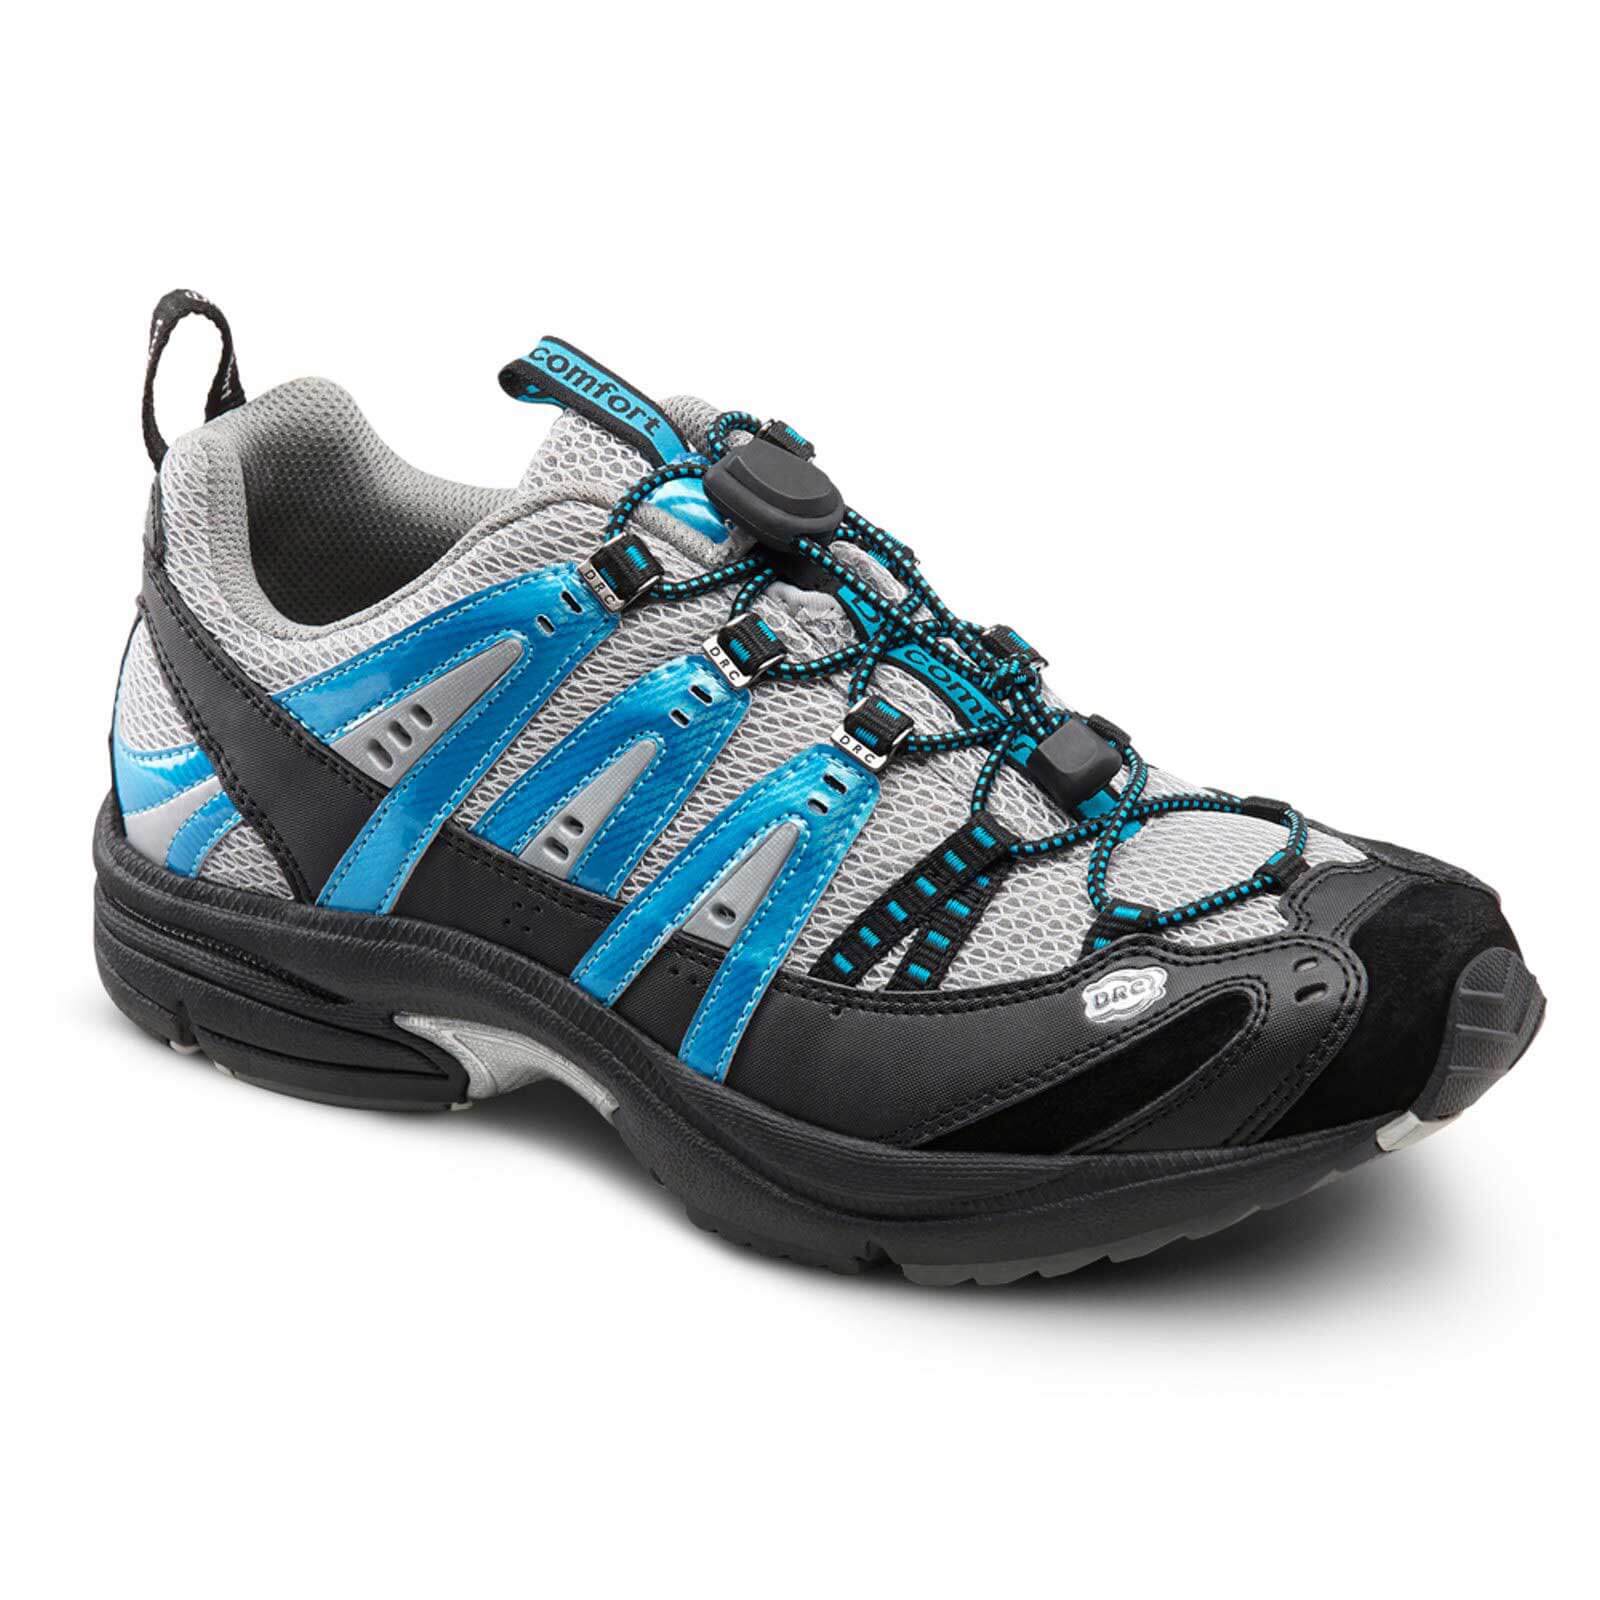 Dr. Comfort Performance Men's Athletic Shoe: 6 X-Wide (3E/4E) Metallic/Blue Elastic & Standard Laces - image 1 of 5